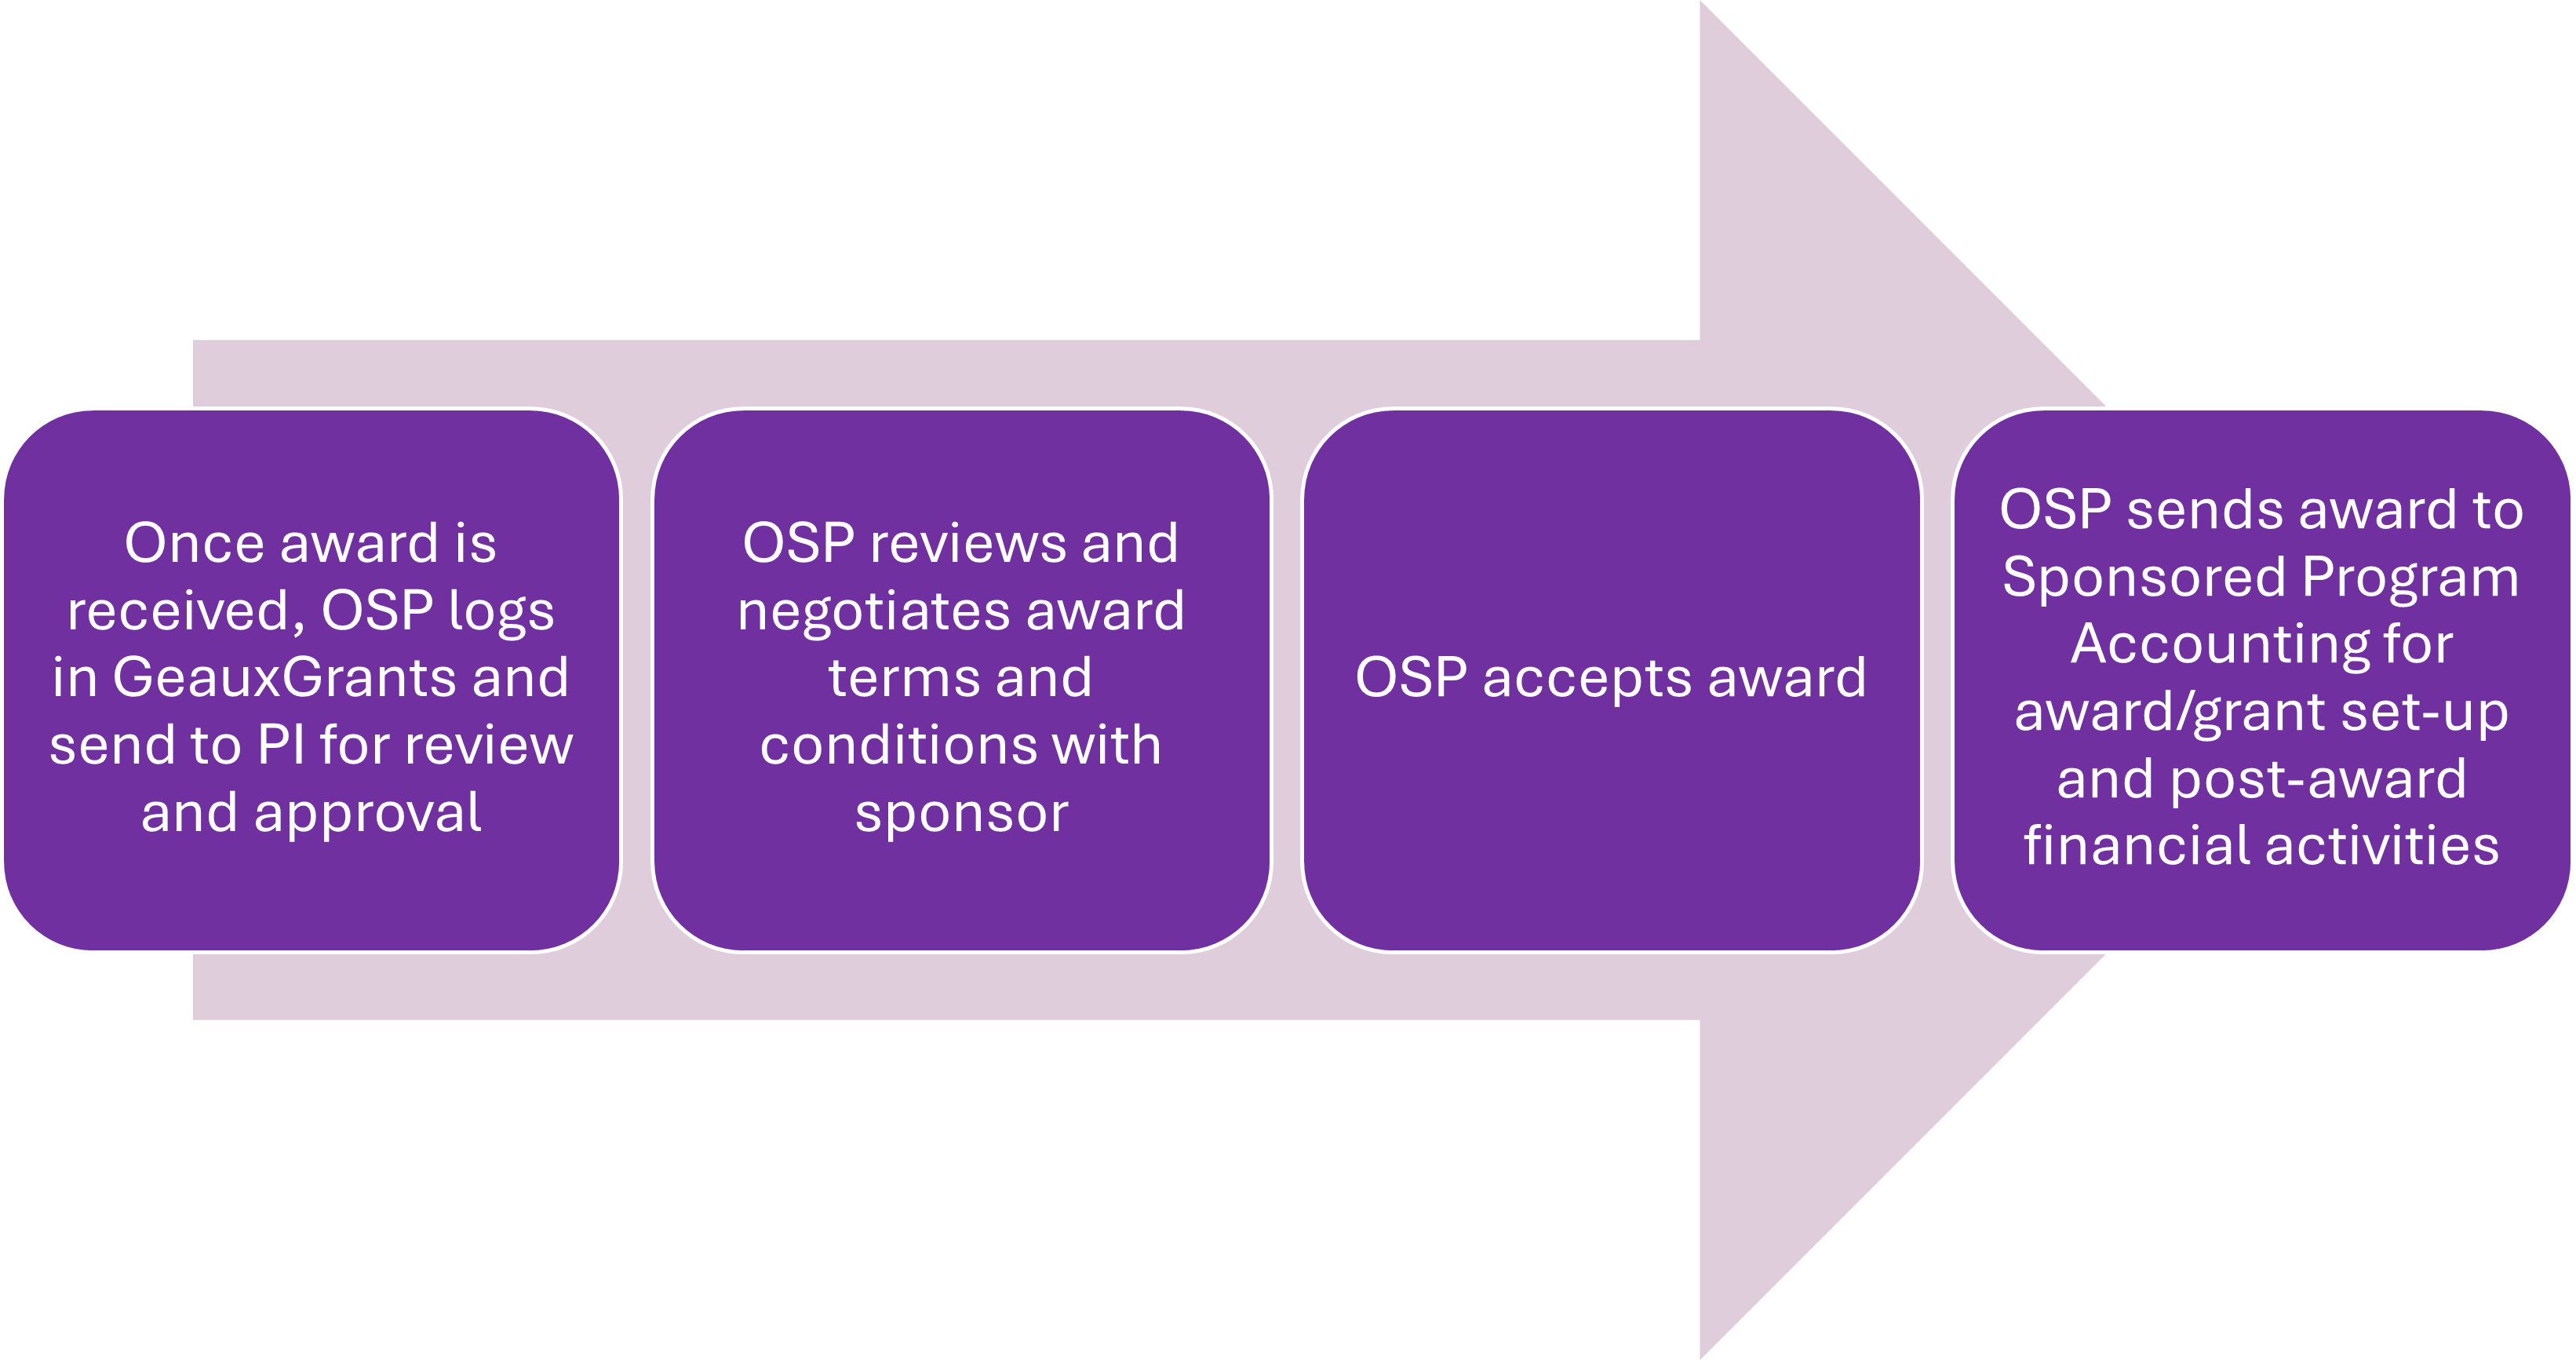 Illustration of the award process